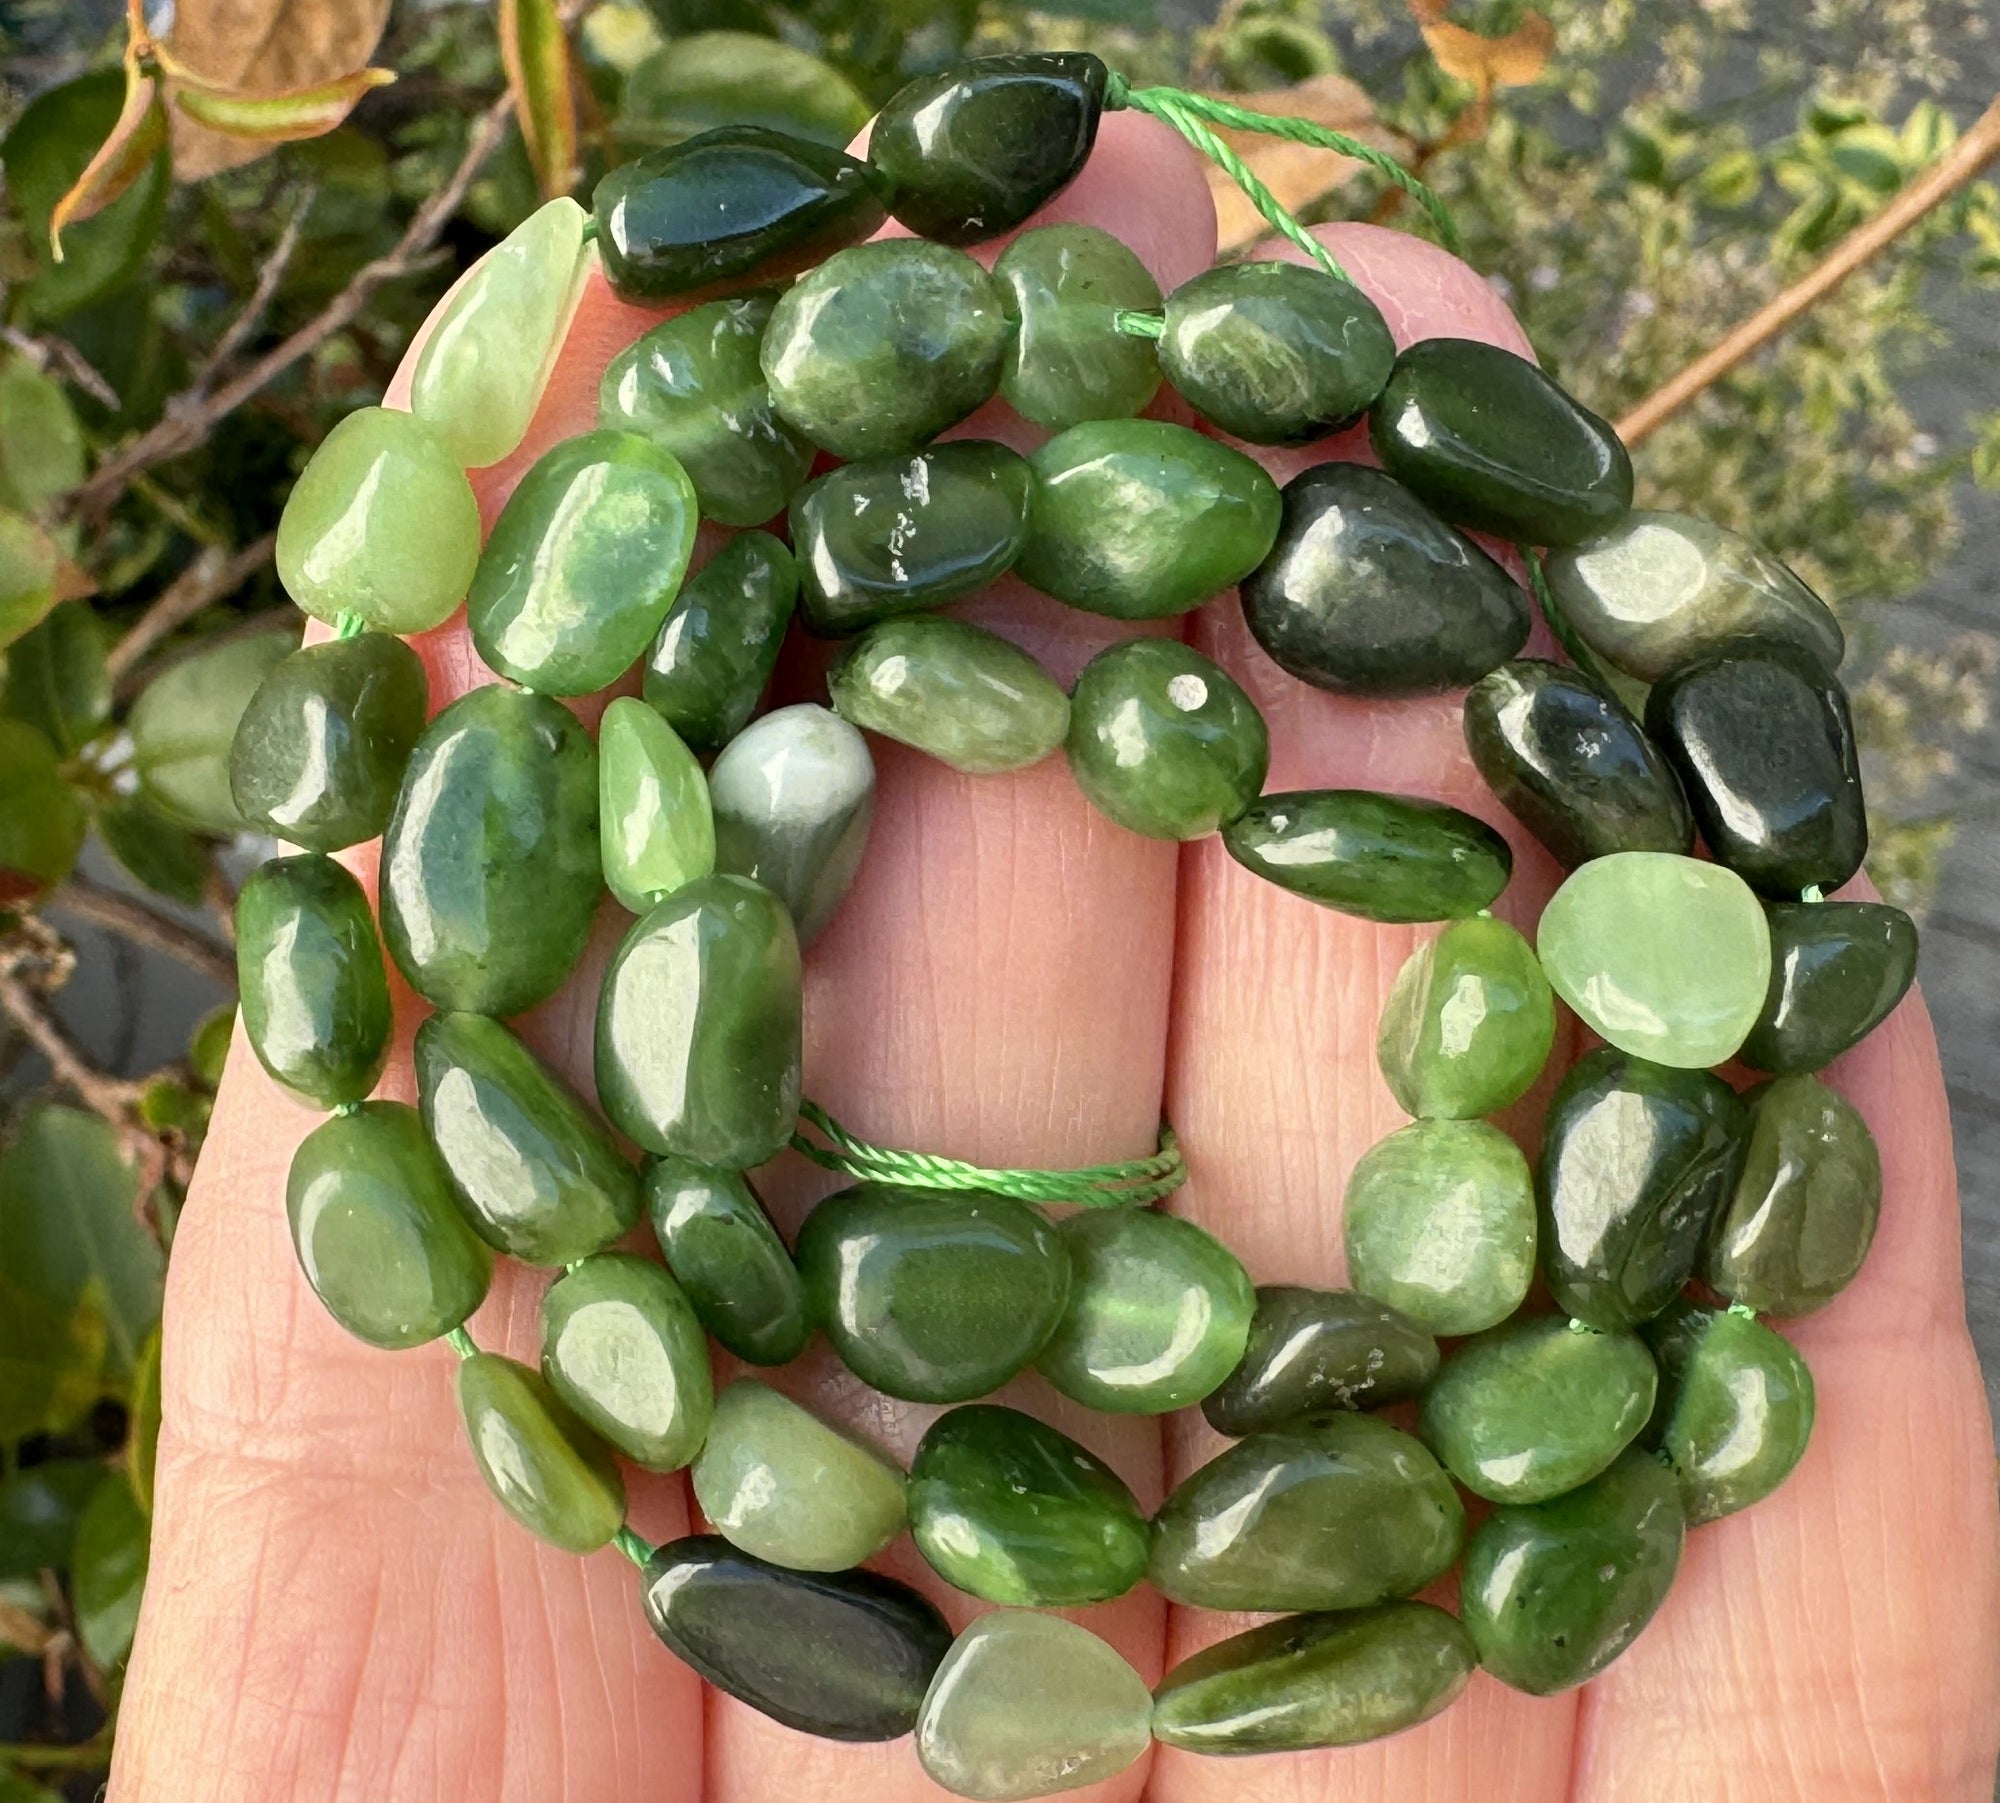 Canadian Jade 7-10mm nuggets natural gemstone beads 16" strand